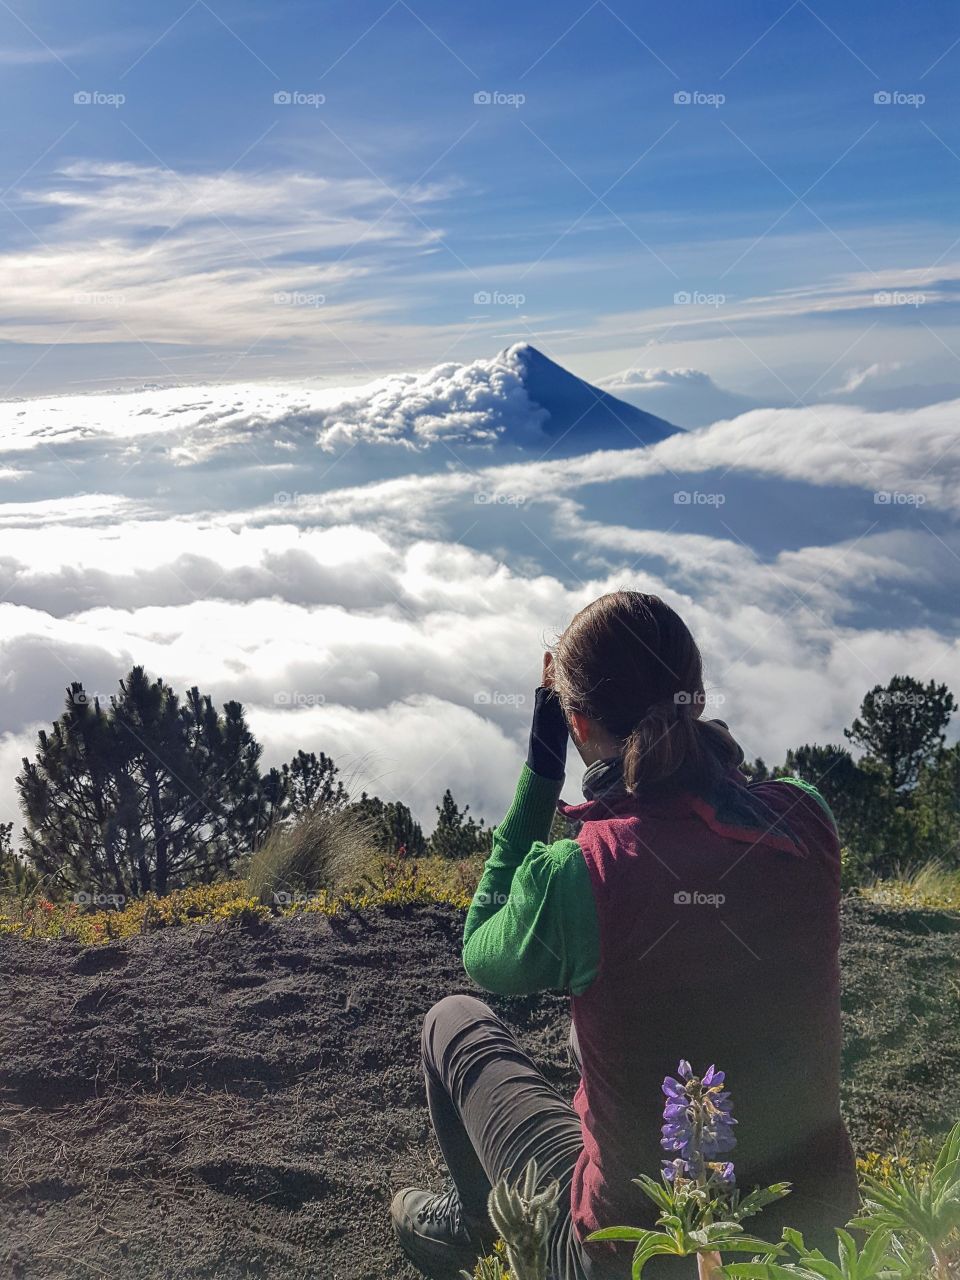 me admiring the view at Agua volcano, Acatenango hike, Guatemala